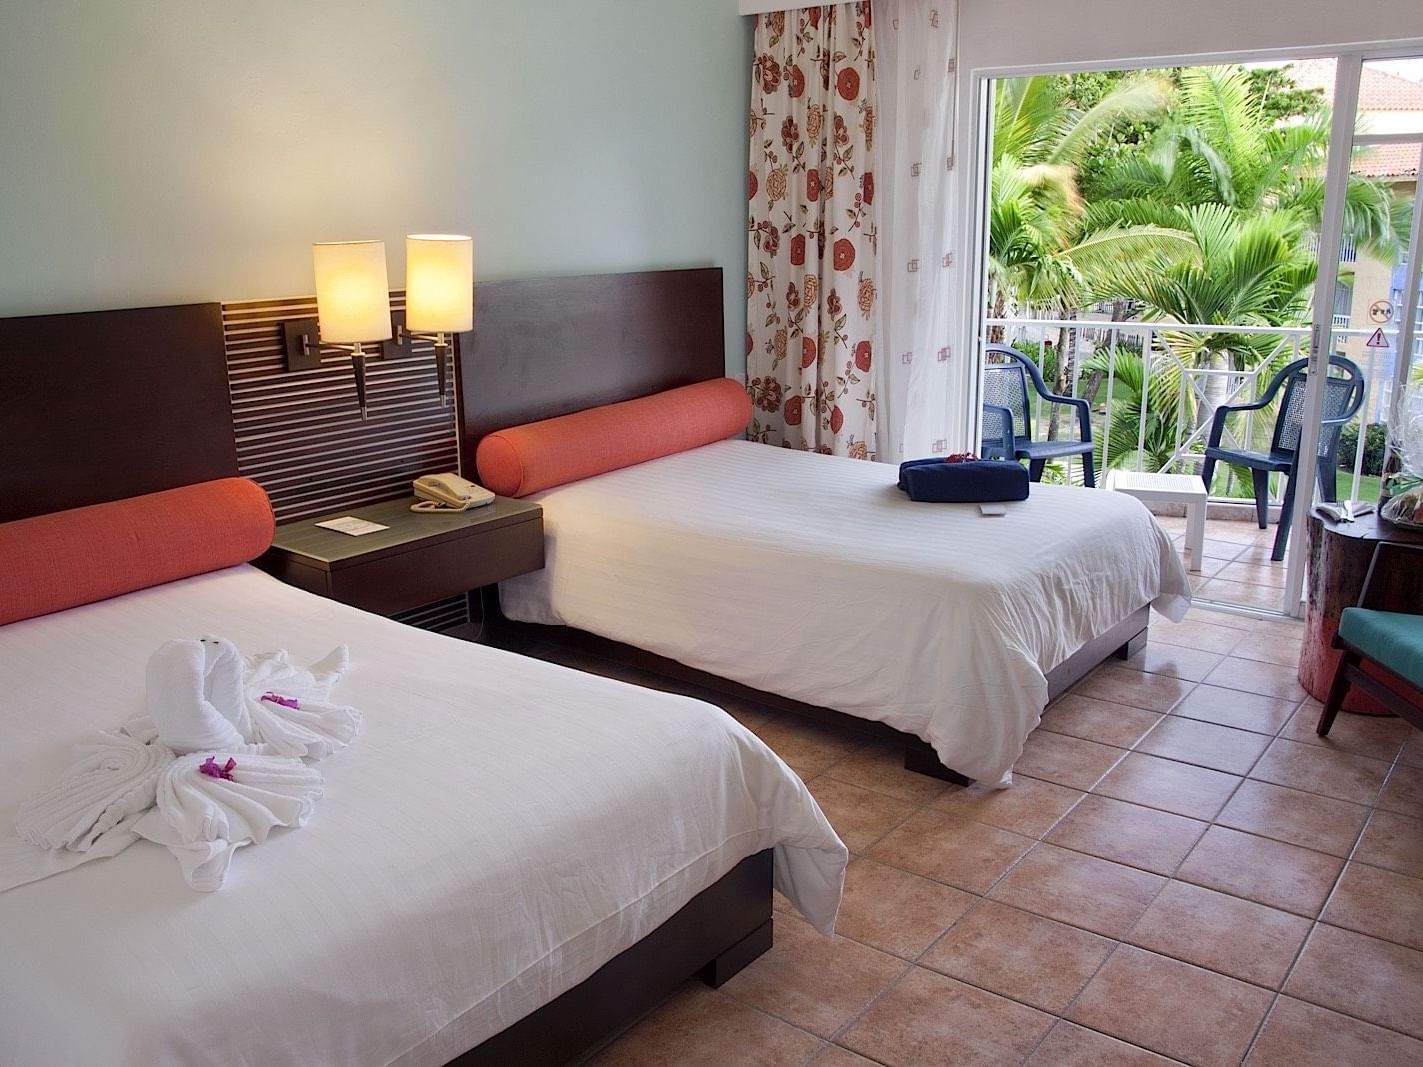 2 beds in the Junior Suite bedroom at Gran Ventana Beach Resort